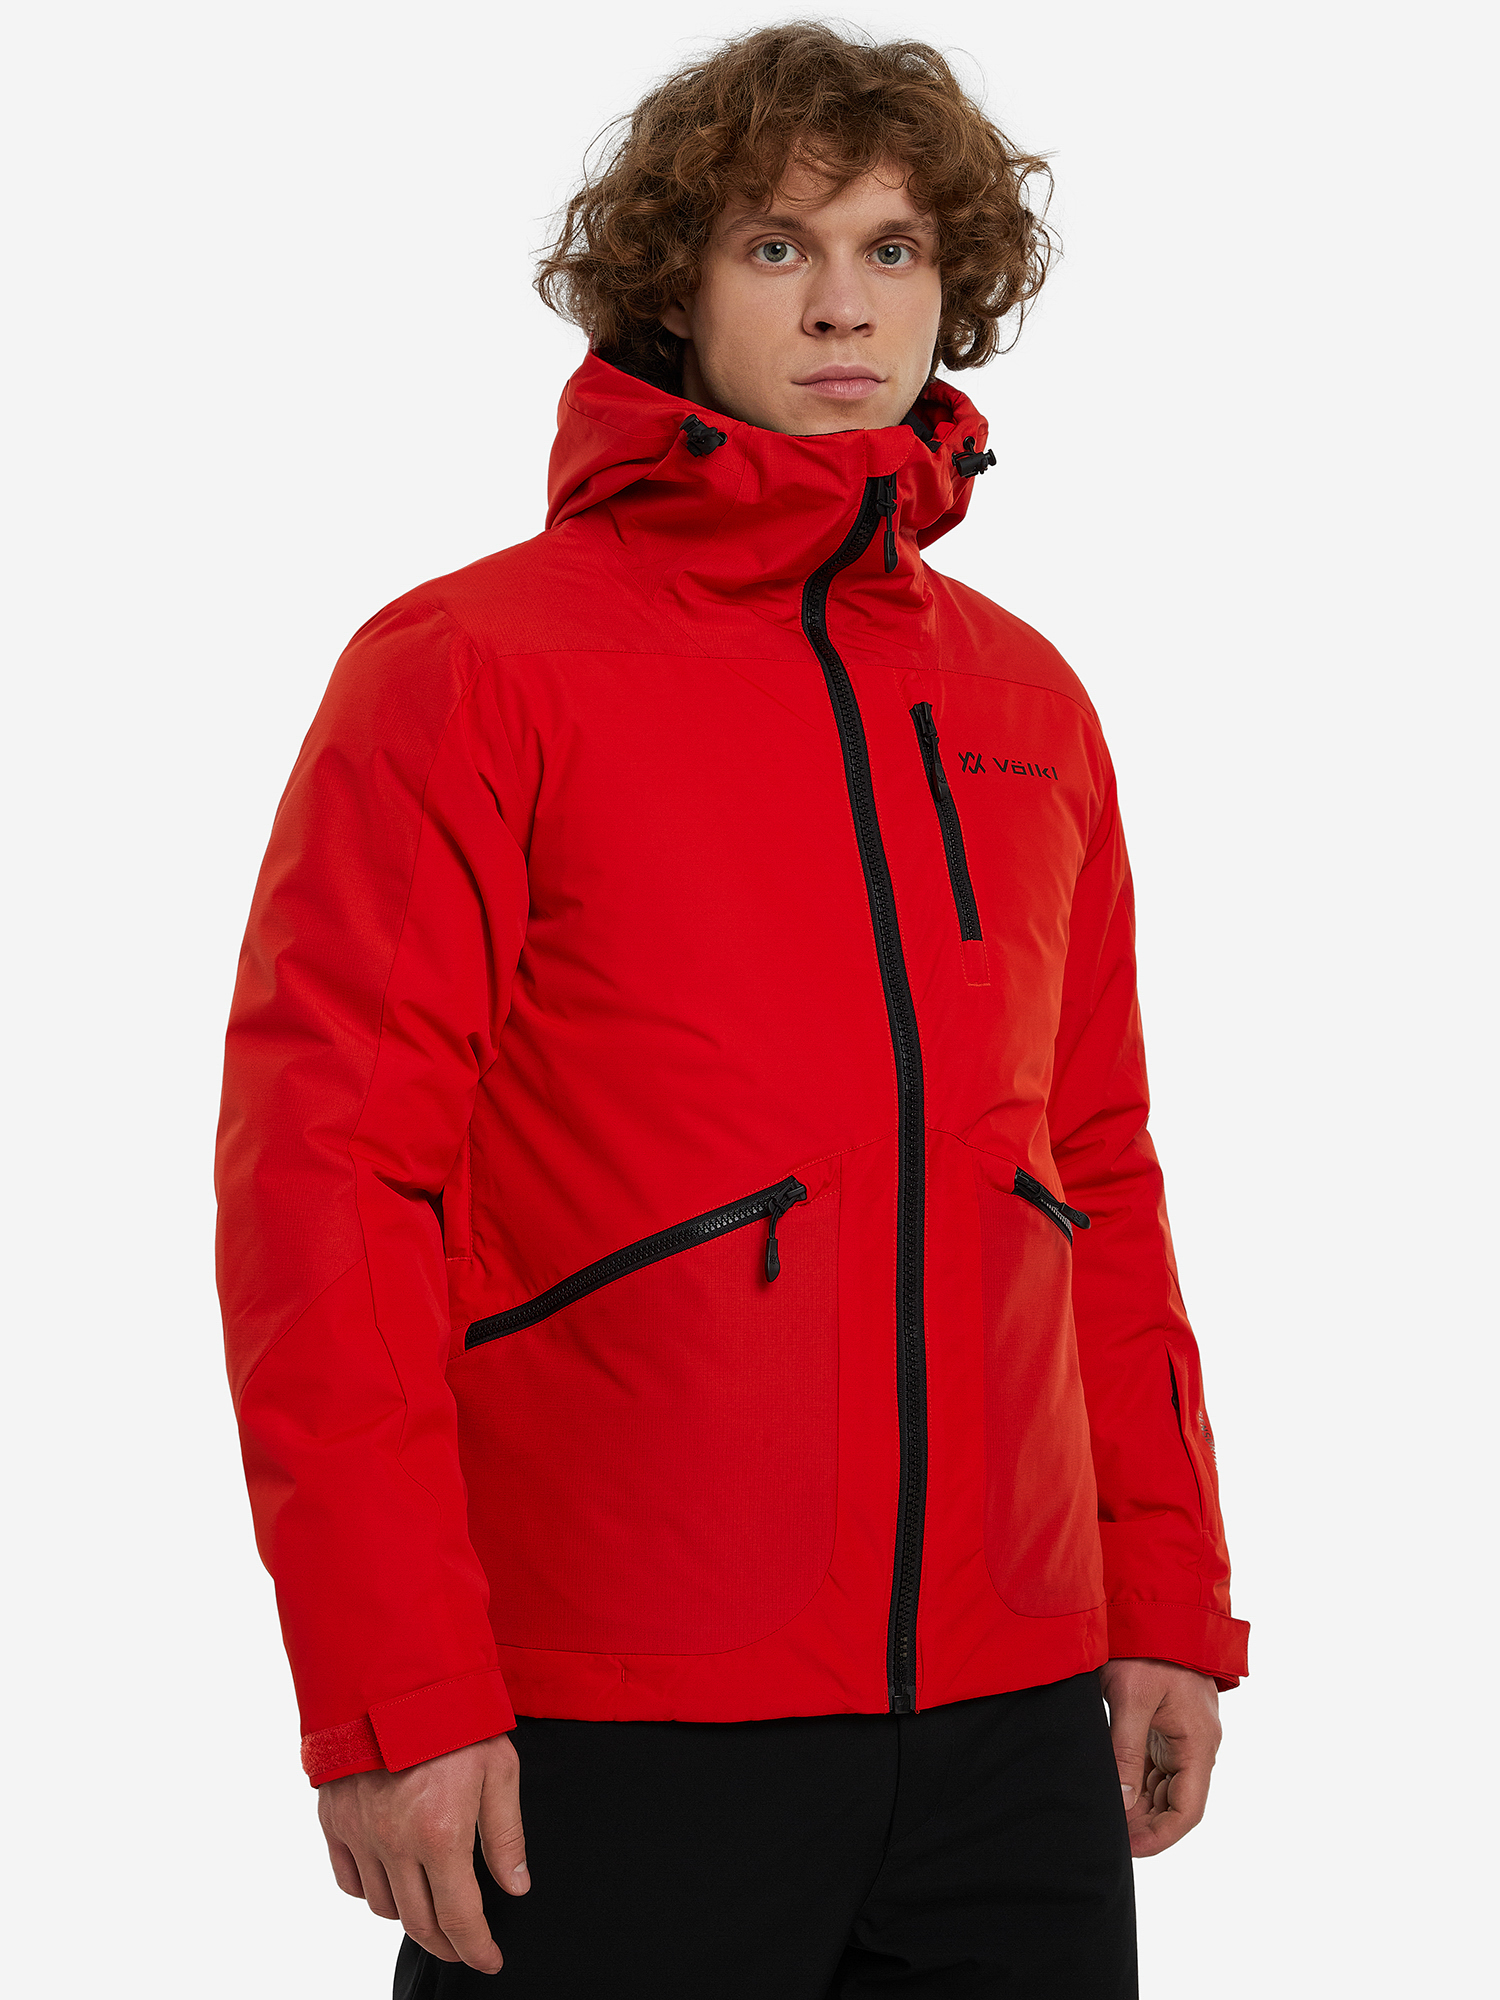 Куртка утепленная мужская Volkl, Красный футболка мужская kappa красный